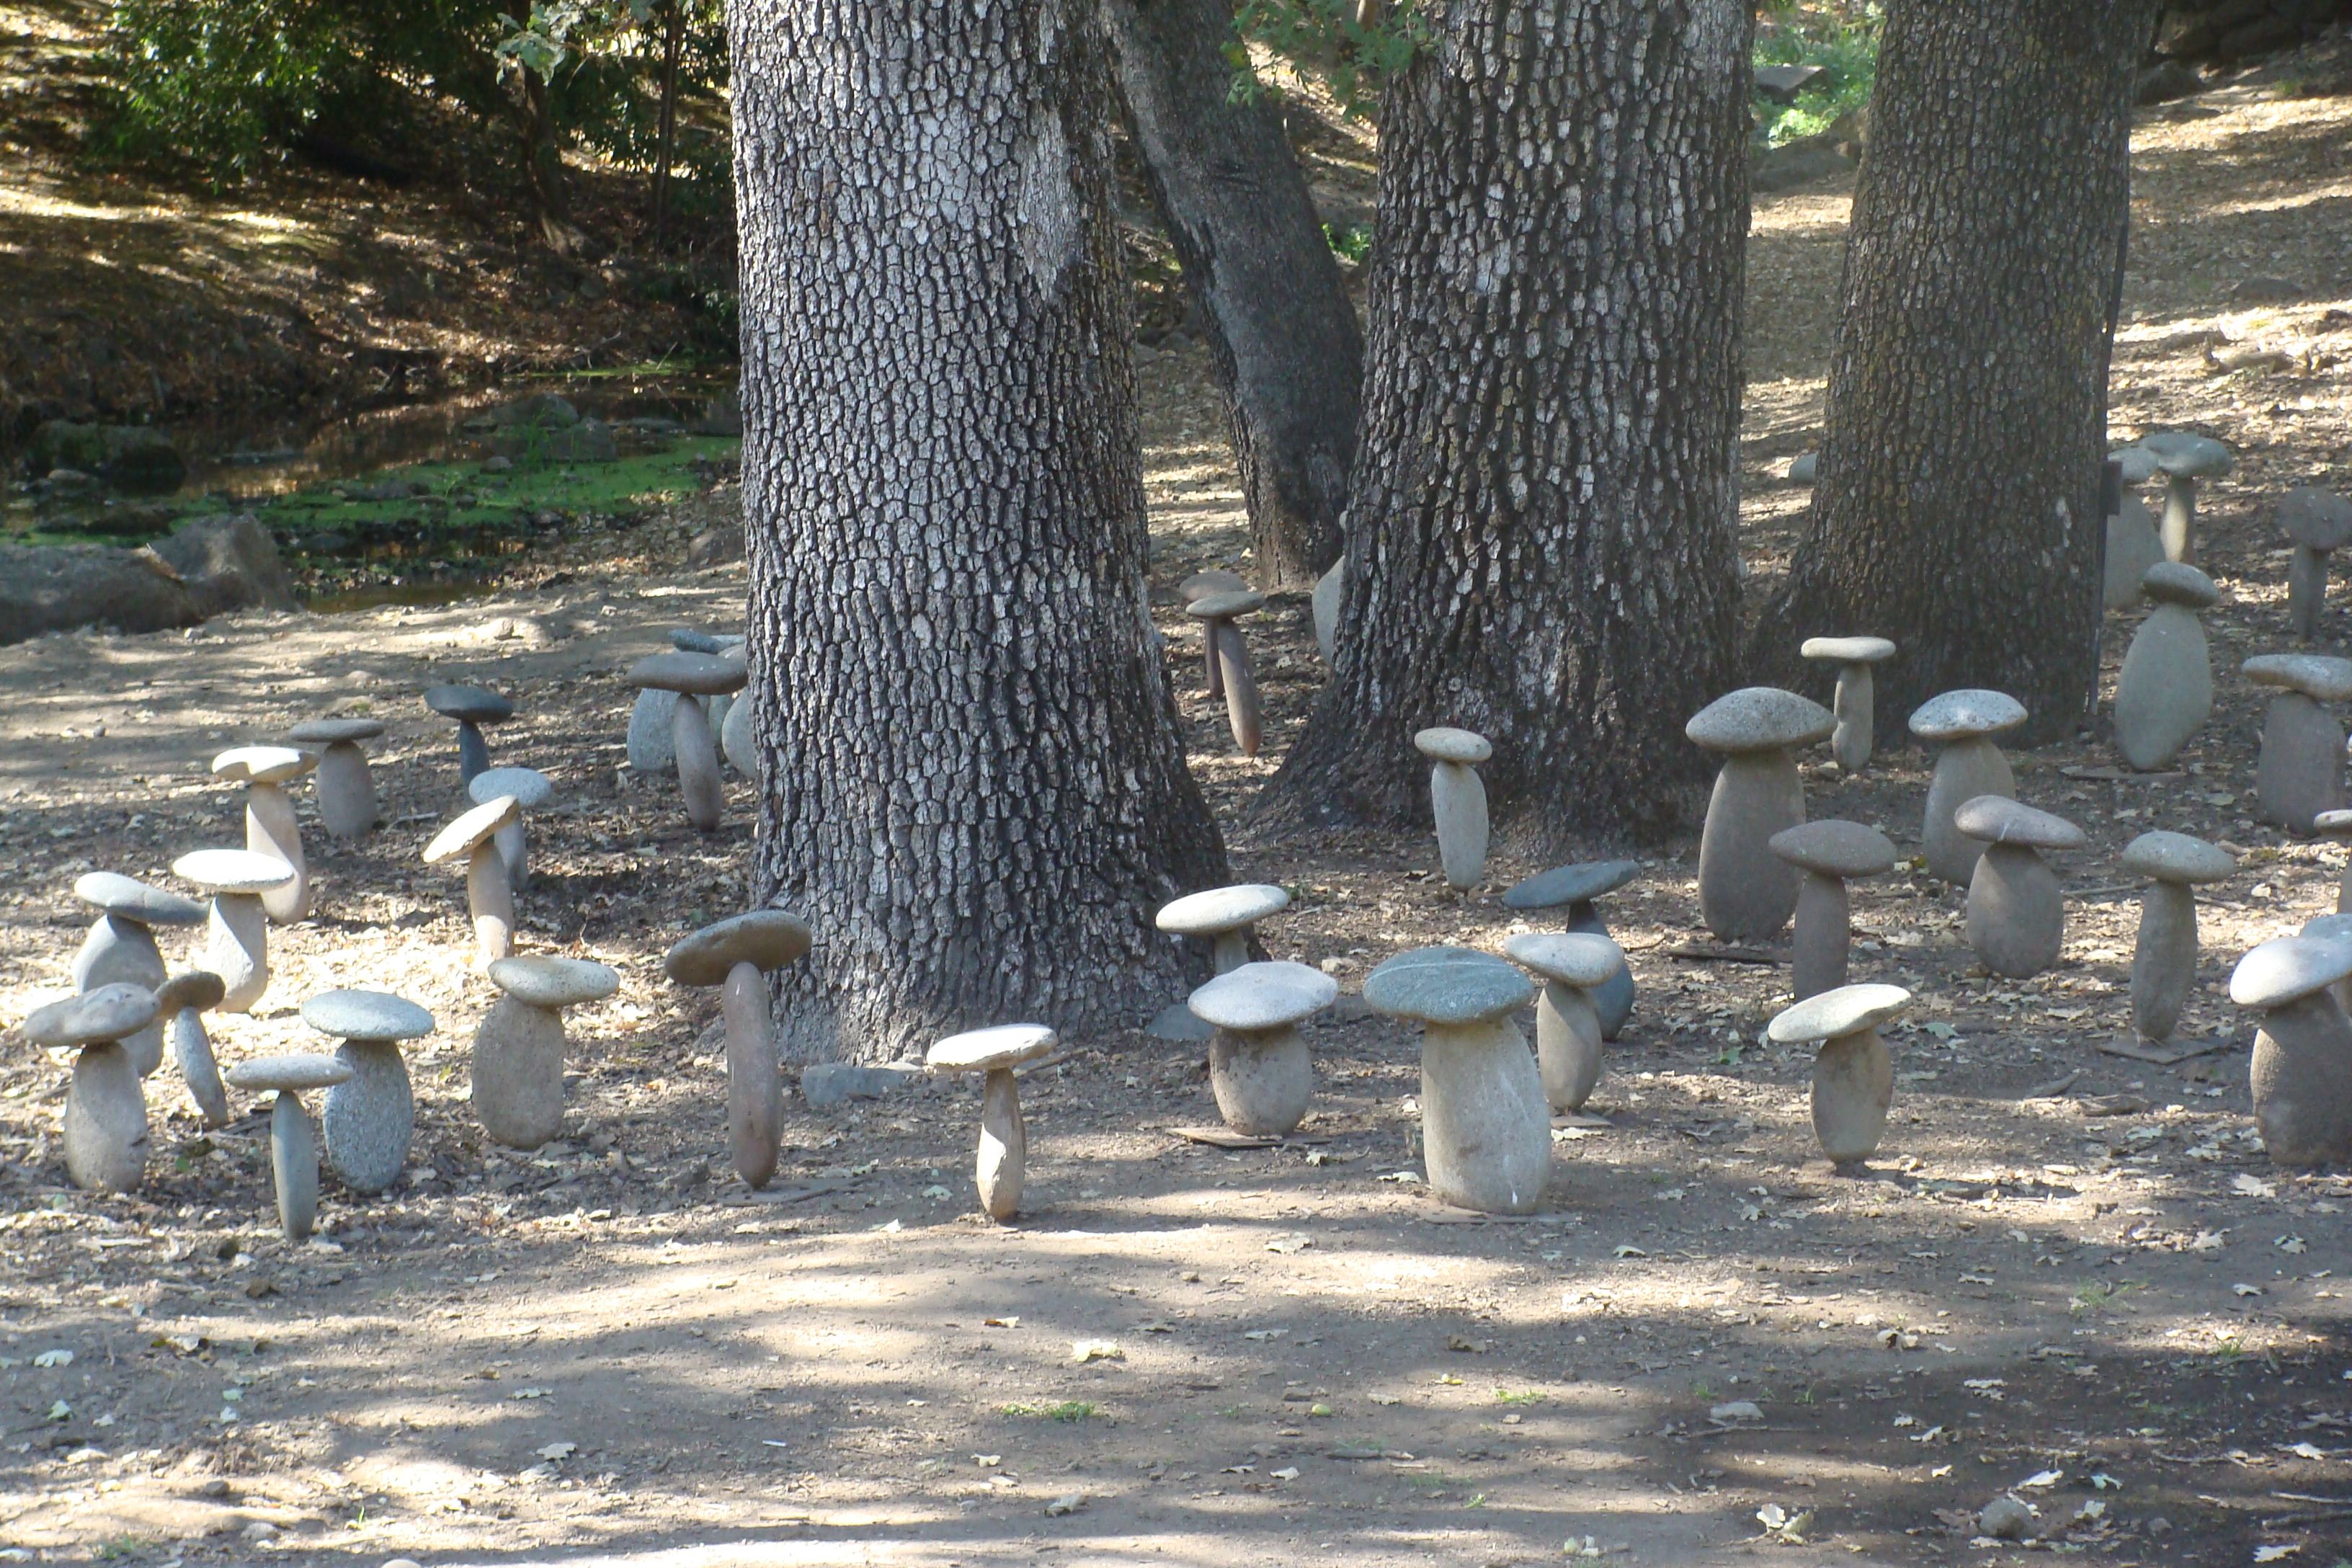 A "mushroom garden" at Domaine Chandon